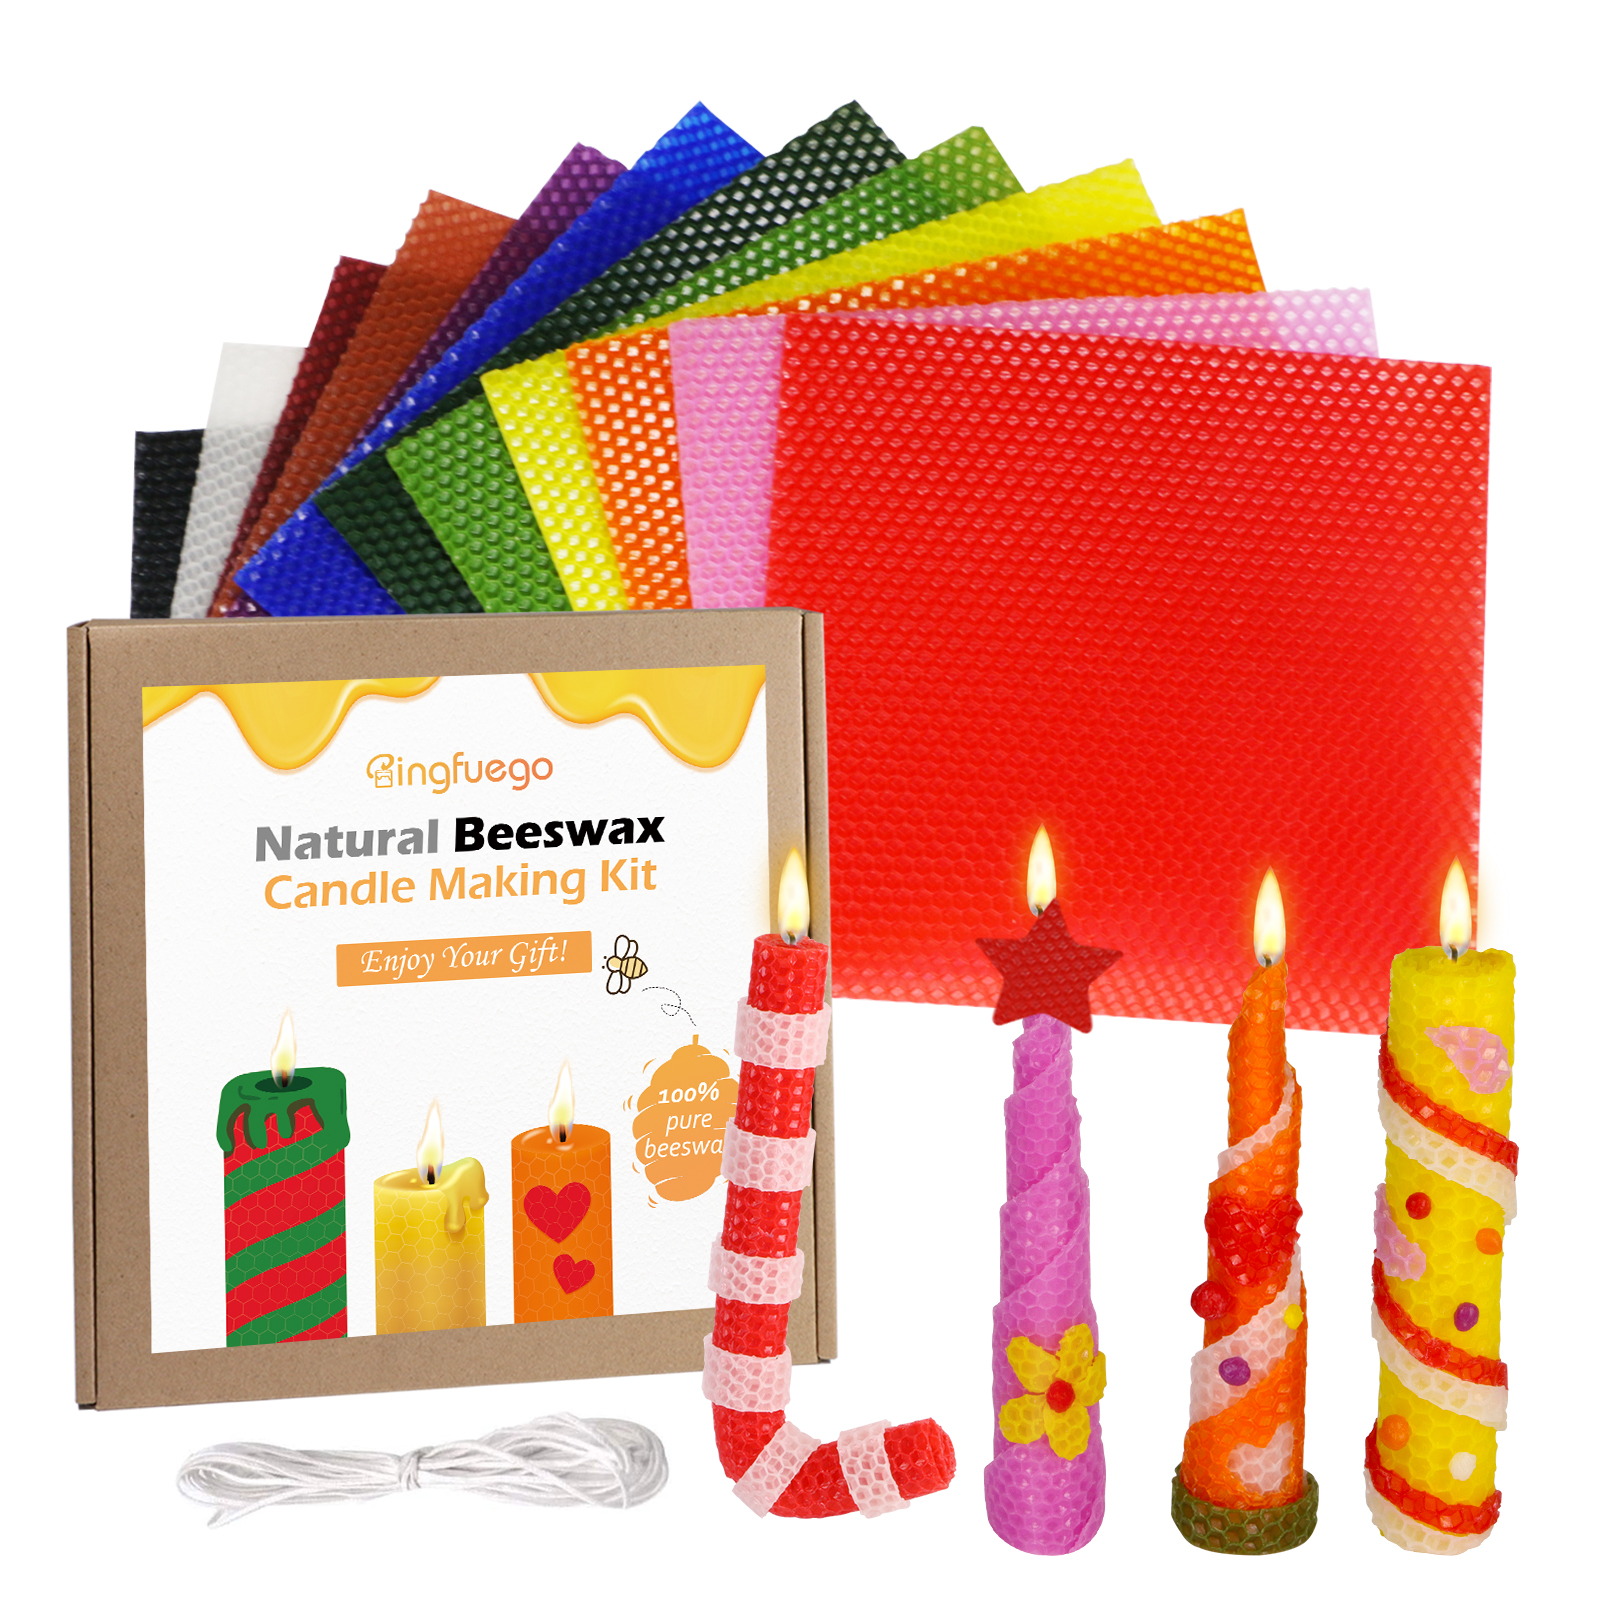 Bingfuego Beeswax Candle Making Kit for kids-12 Colors Beeswax Sheets for Candle  Making, Make You own Candle Making kit for Adults, 100% Pure Beeswax  Honeycomb Sheet DIY Craft Gift,8 x 8 inch – bingfuego